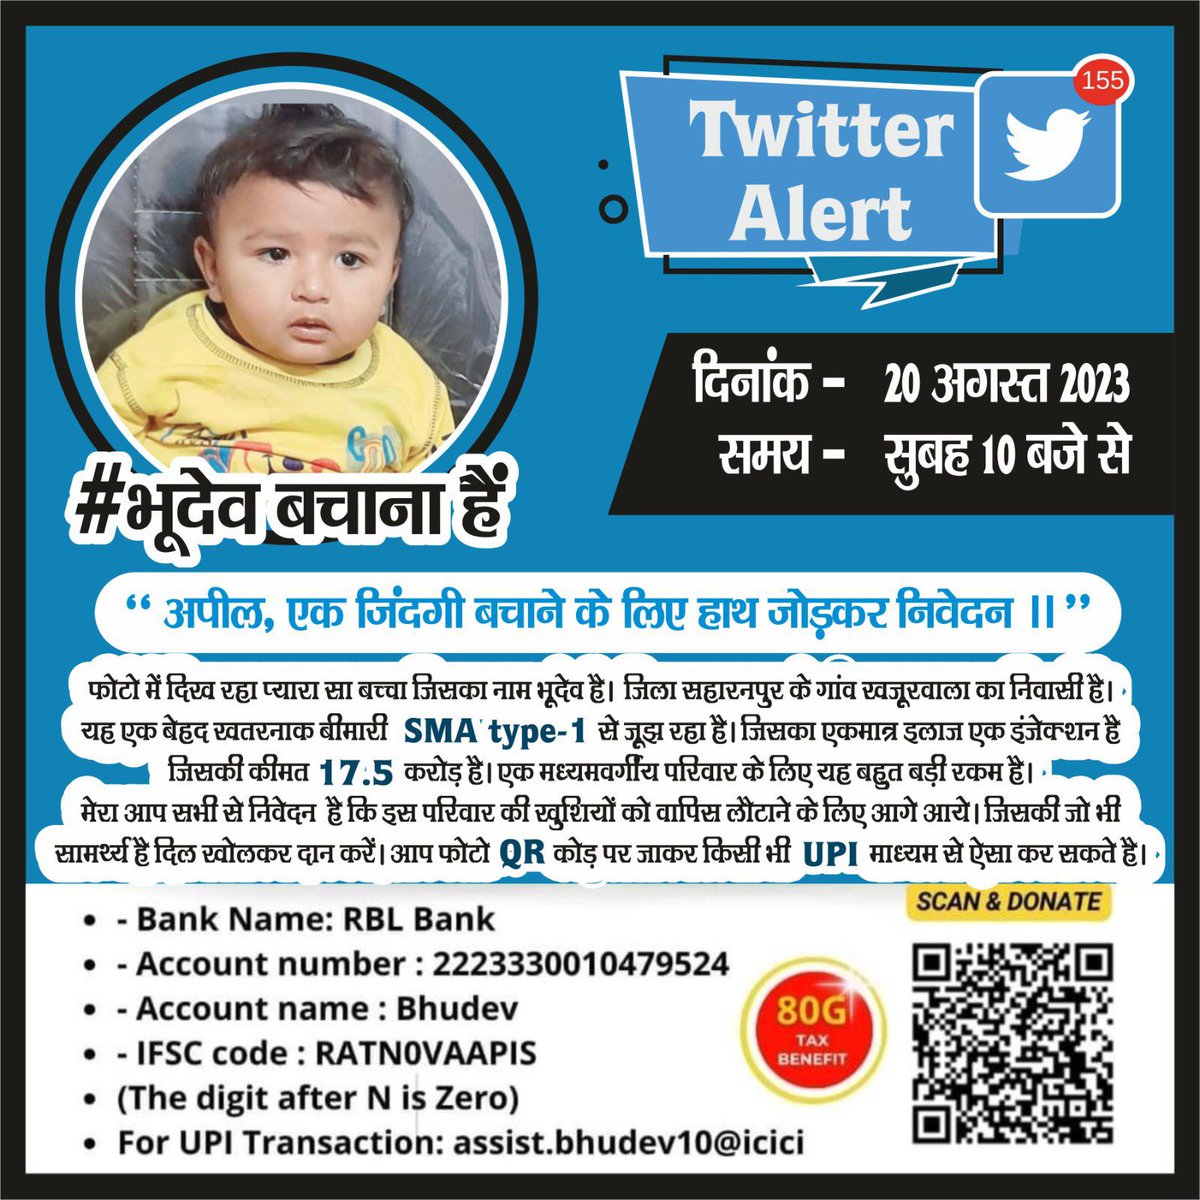 #भूदेव_बचाना_हैं
#SaveBhudev
Respected sir plz save our bhudev
@ril_foundation @anandmahindra @AdaniFoundation @Wipro @Infosys @GoogleIndia @SavjiDholakia @LTI_Global @OfficialYUVA @Rotary @lionsclubs @save_children @GiveIndia @CAREIndia @india
#help_bhudev_save_bhudev